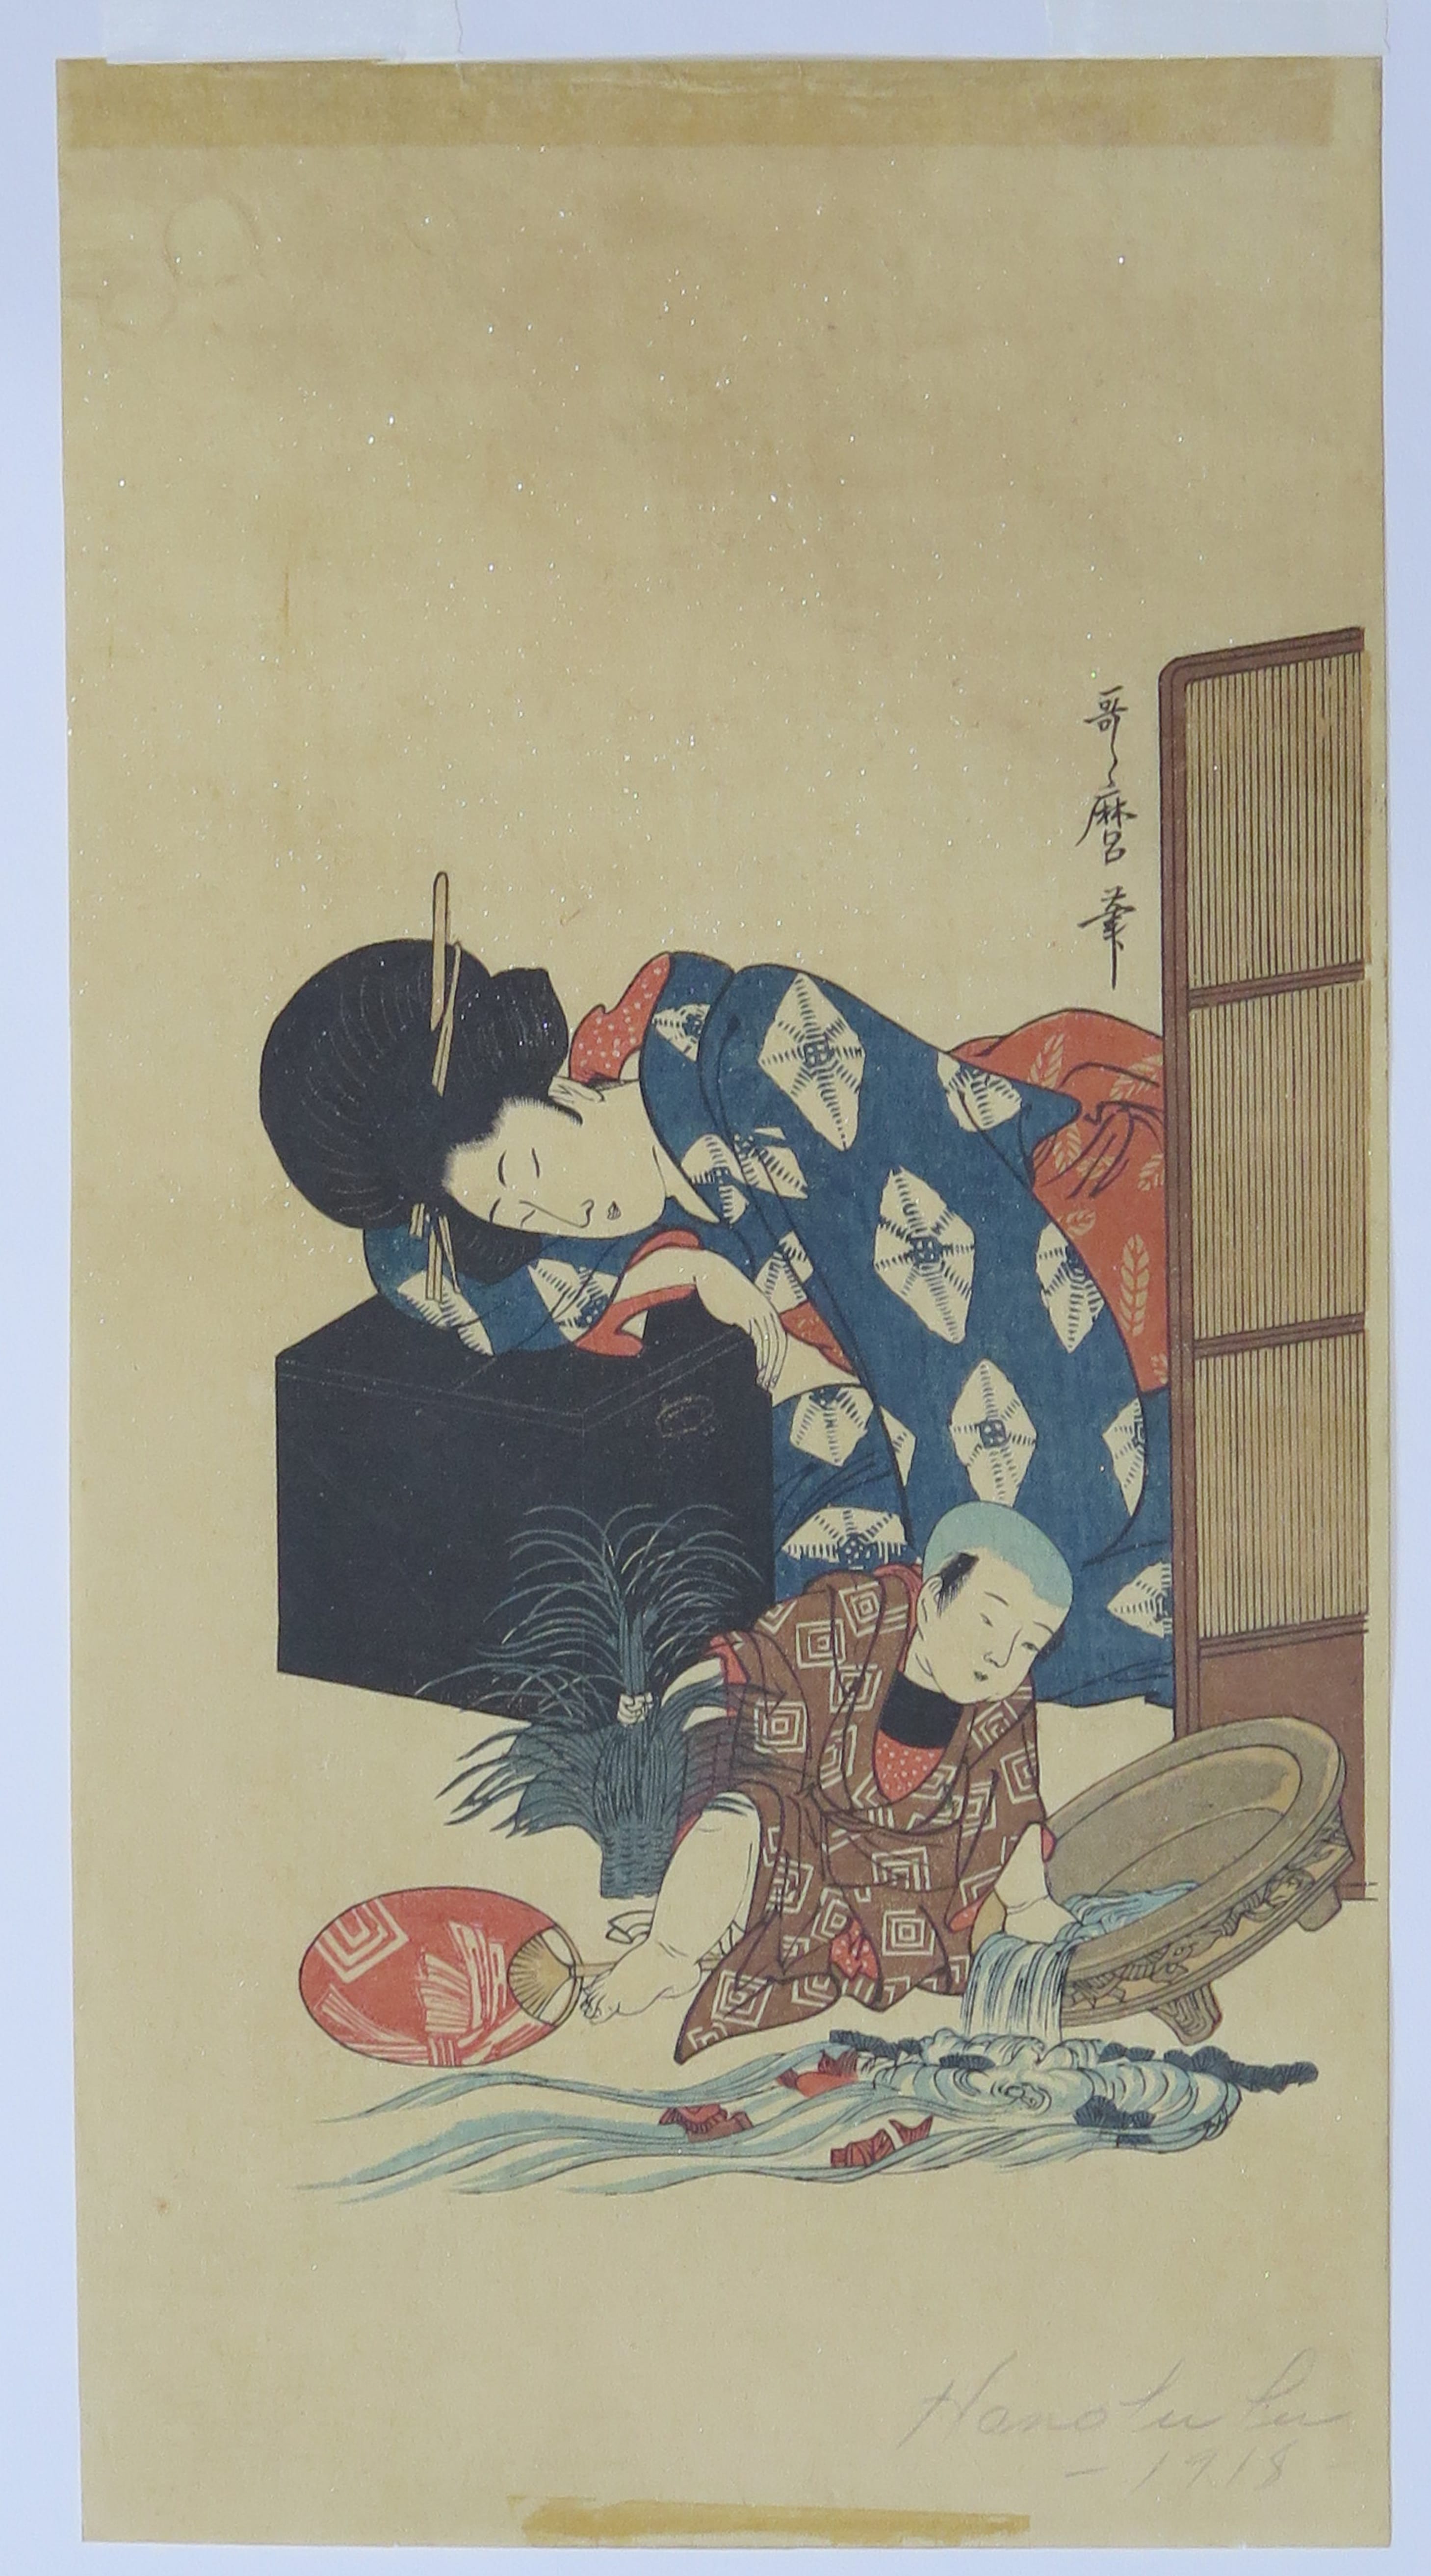 Lot 070: Grp: 2 18-19th c. Japanese Woodblock Prints by Utamaro